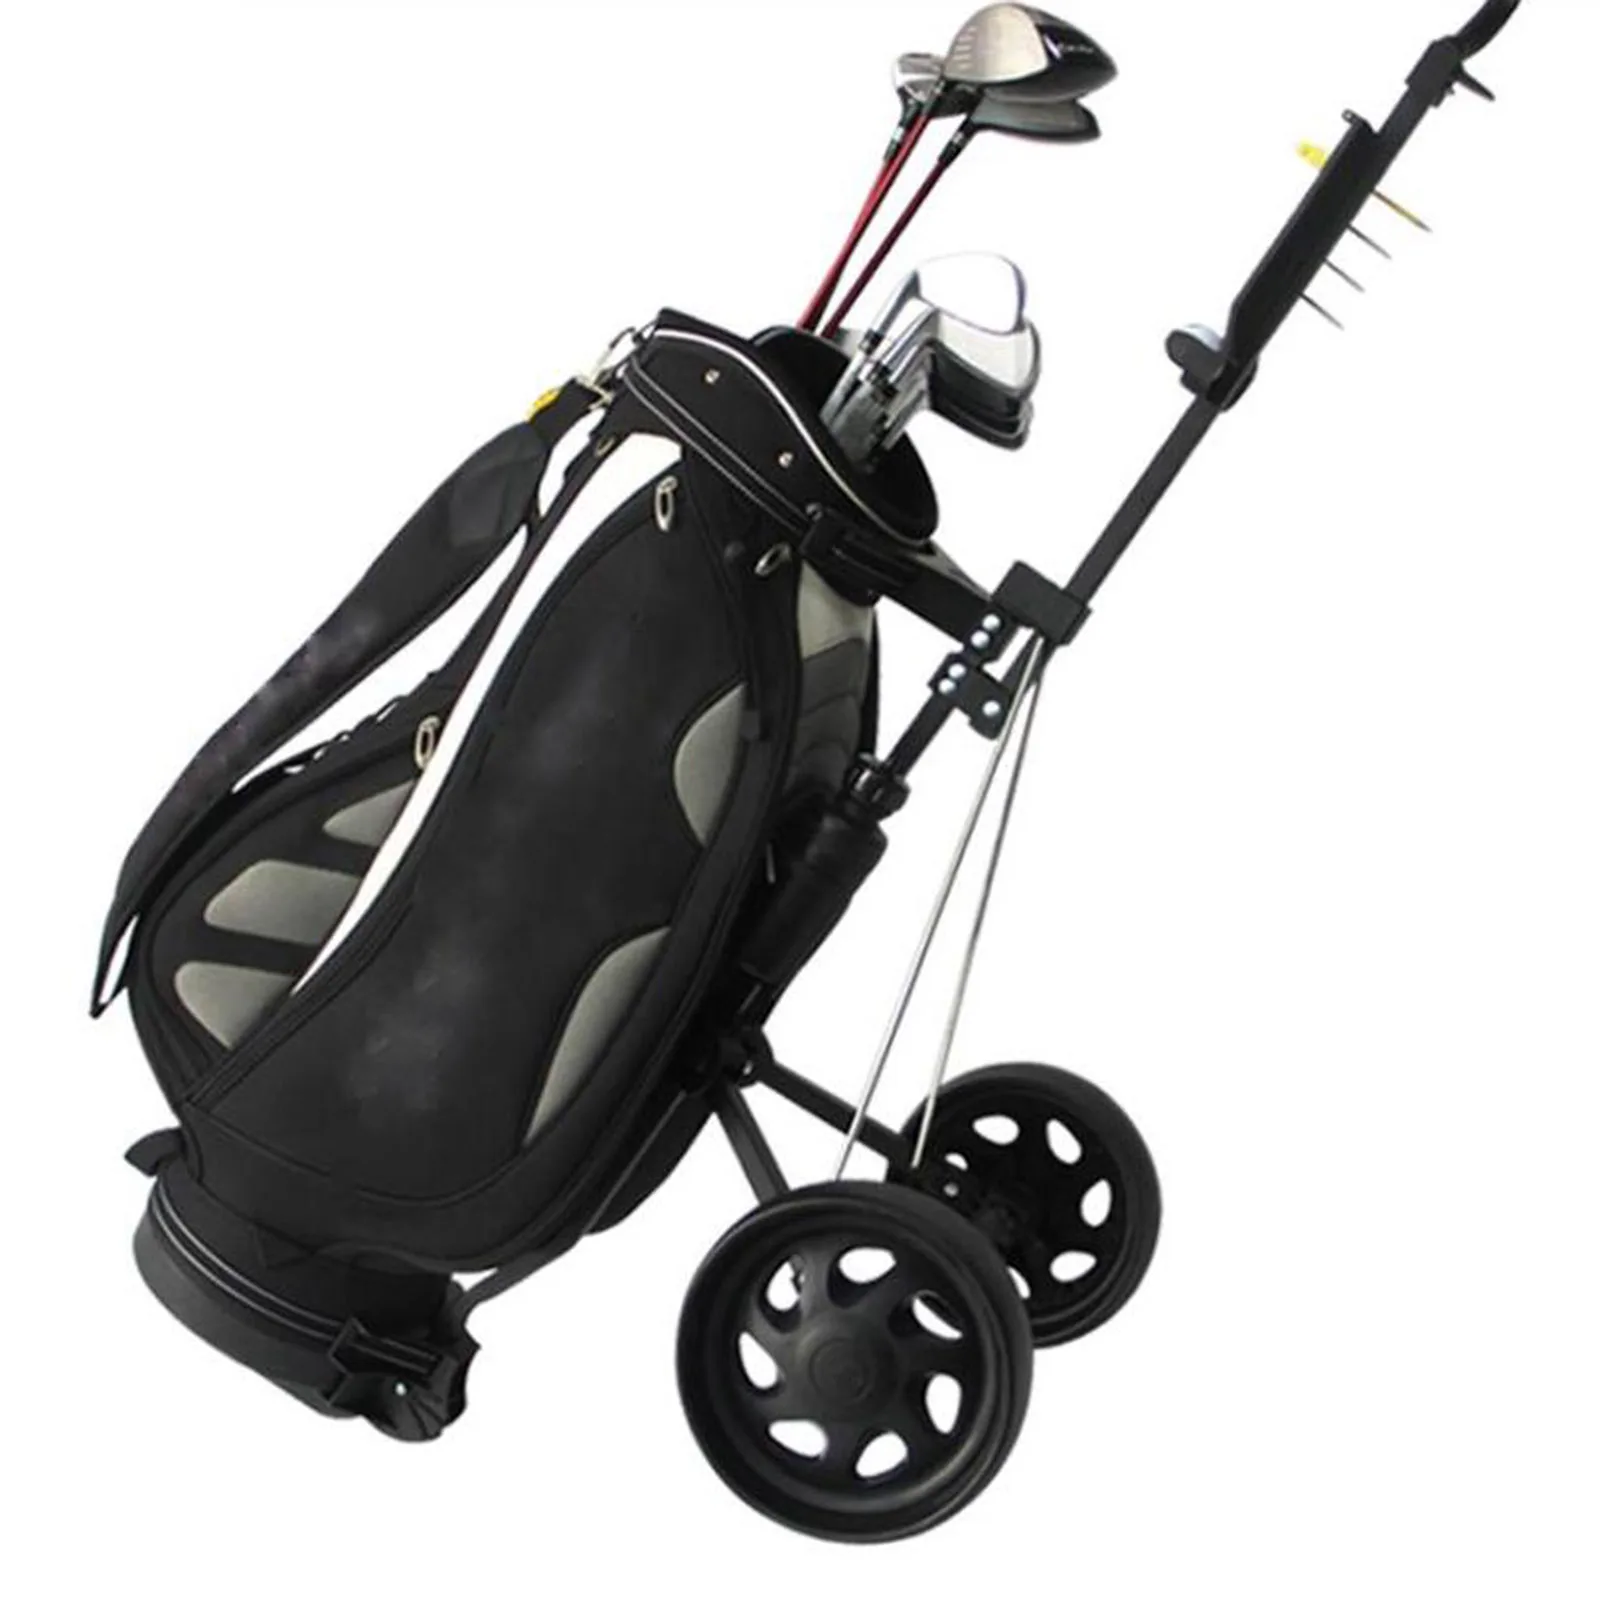 2 Wheel Foldable Golf Pull Trolley Push Cart Bag Stand Golf Buggies Carts